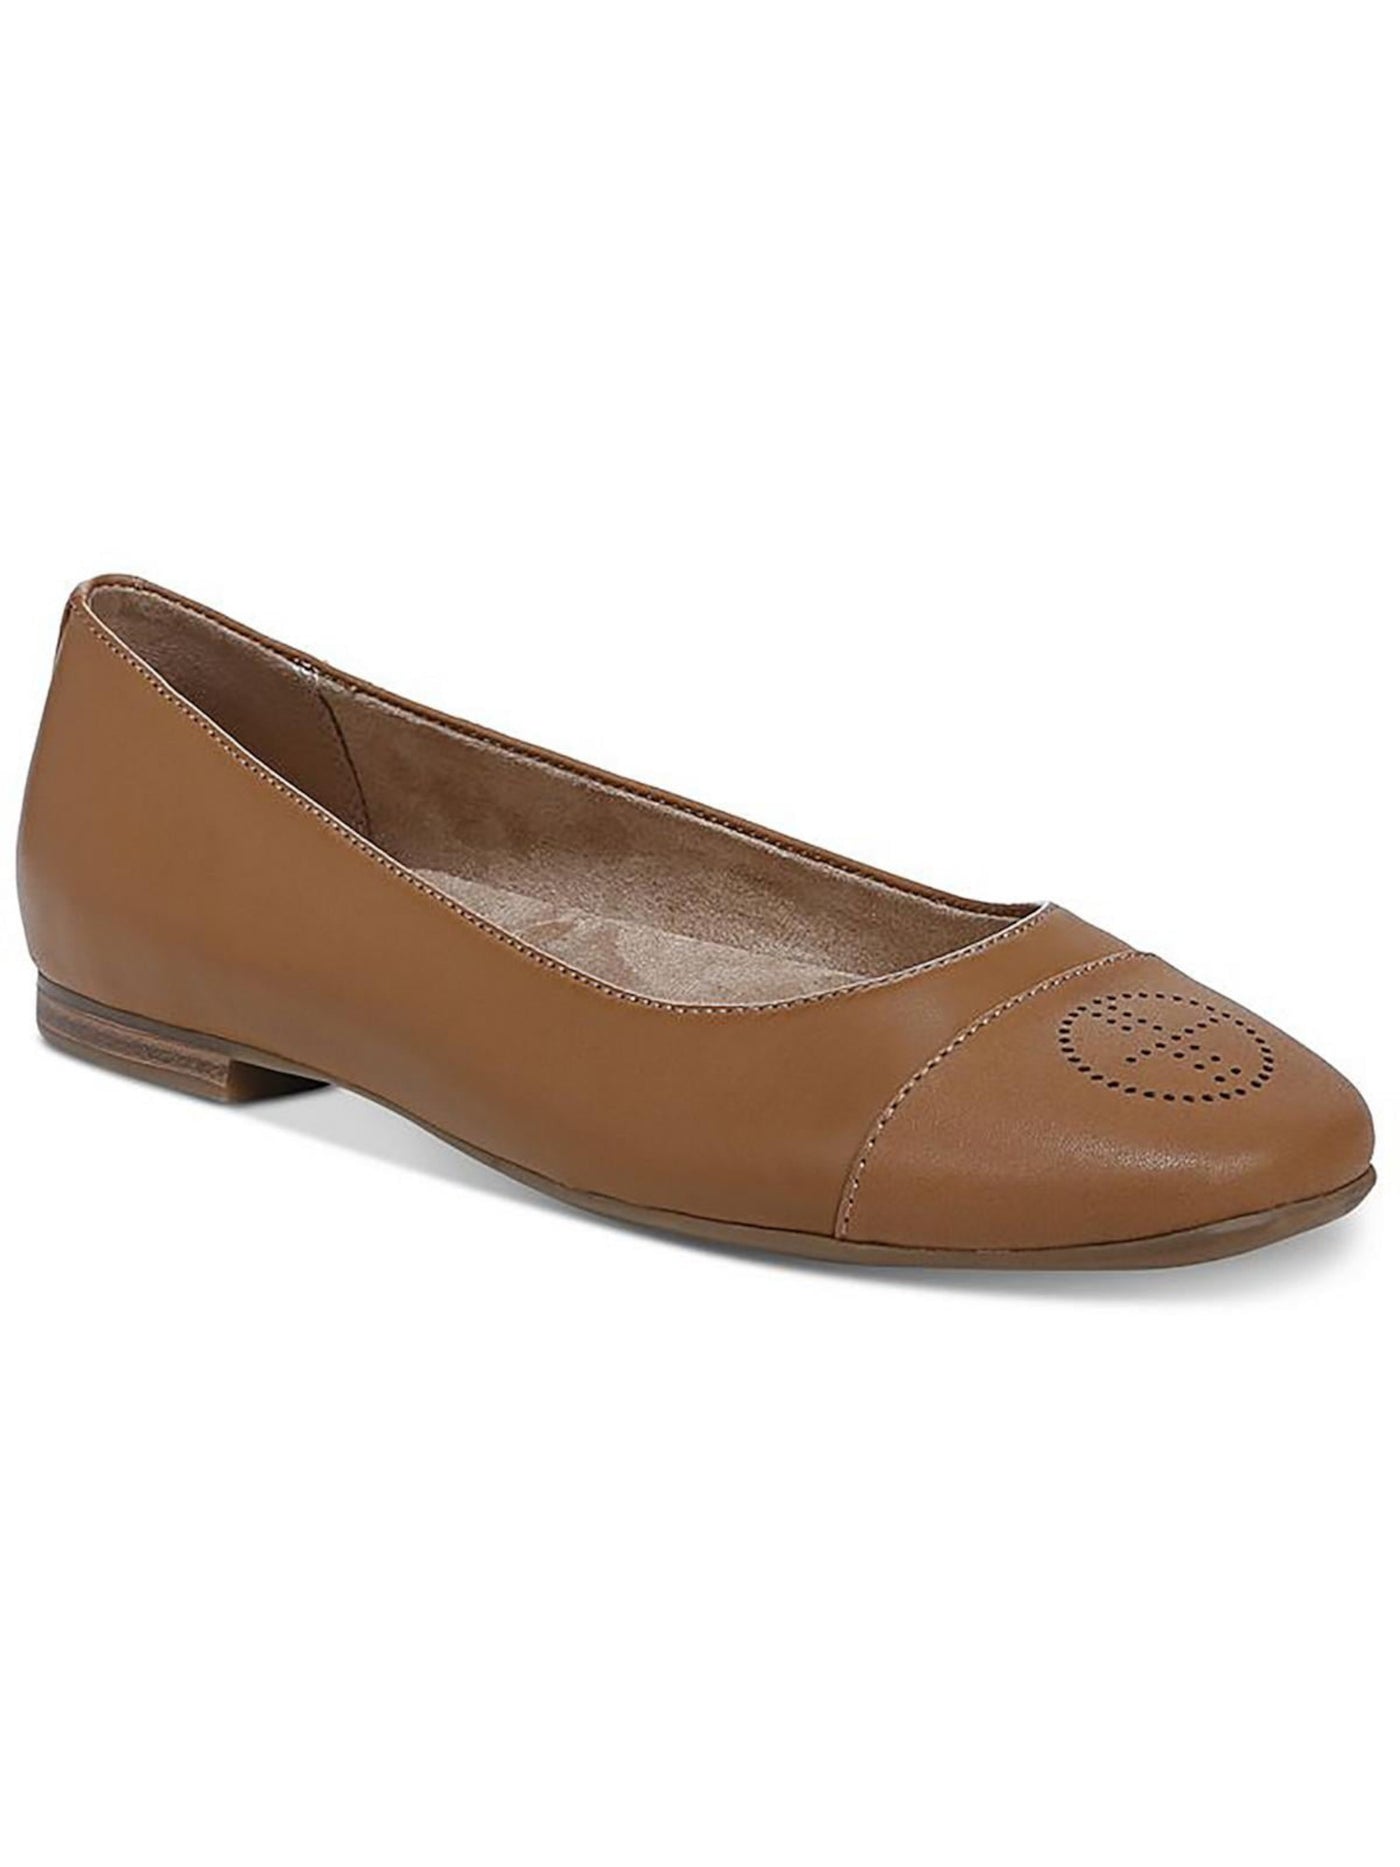 GIANI BERNINI Womens Beige Comfort Perforated Cushioned Aerinn Square Toe Slip On Leather Flats Shoes 6 M